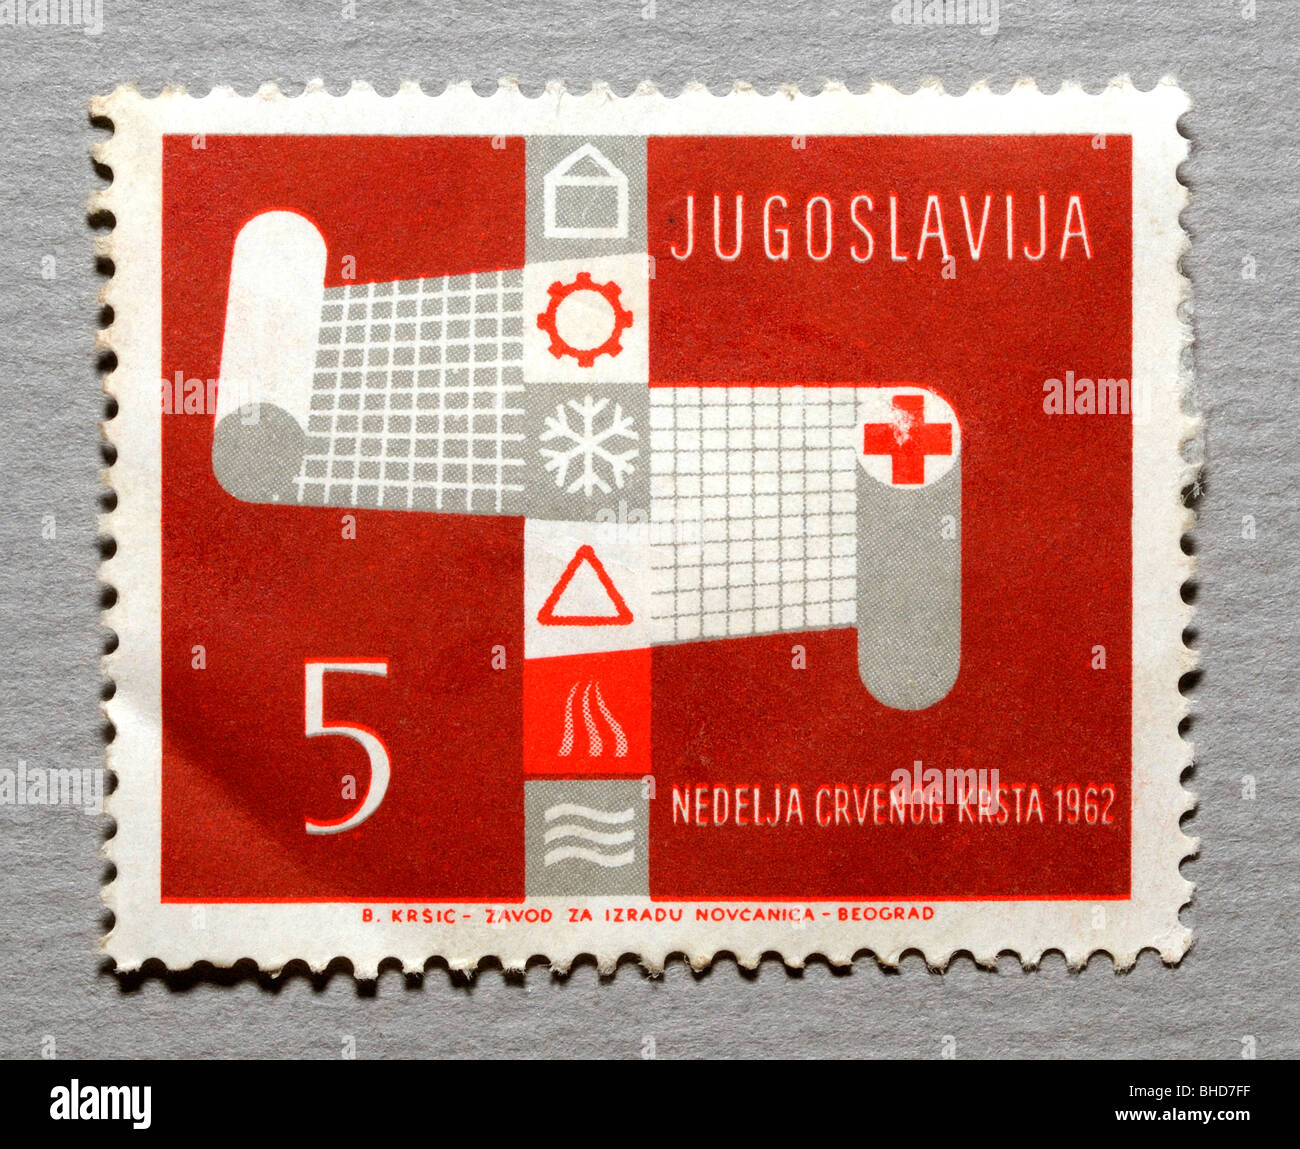 Yugoslavia Jugoslavija Postage Stamp. Stock Photo